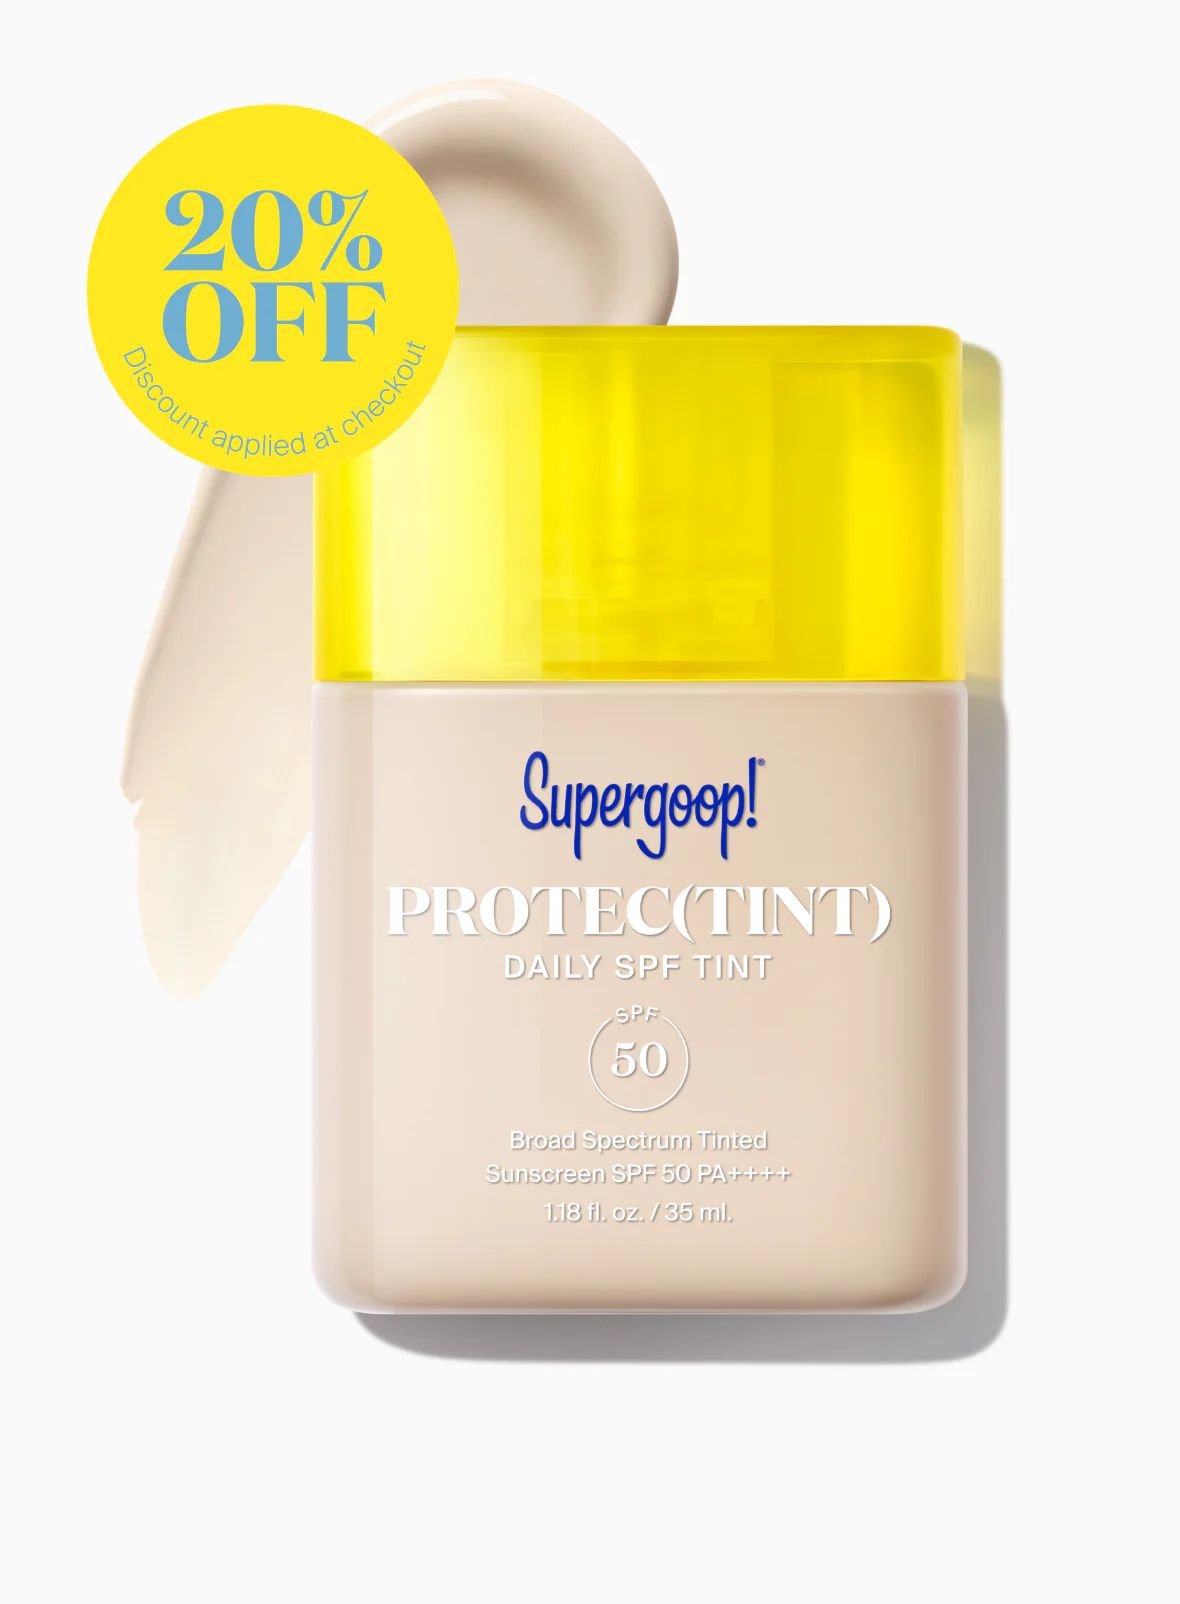 Protec(tint) Daily Skin Tint SPF 50 | Supergoop